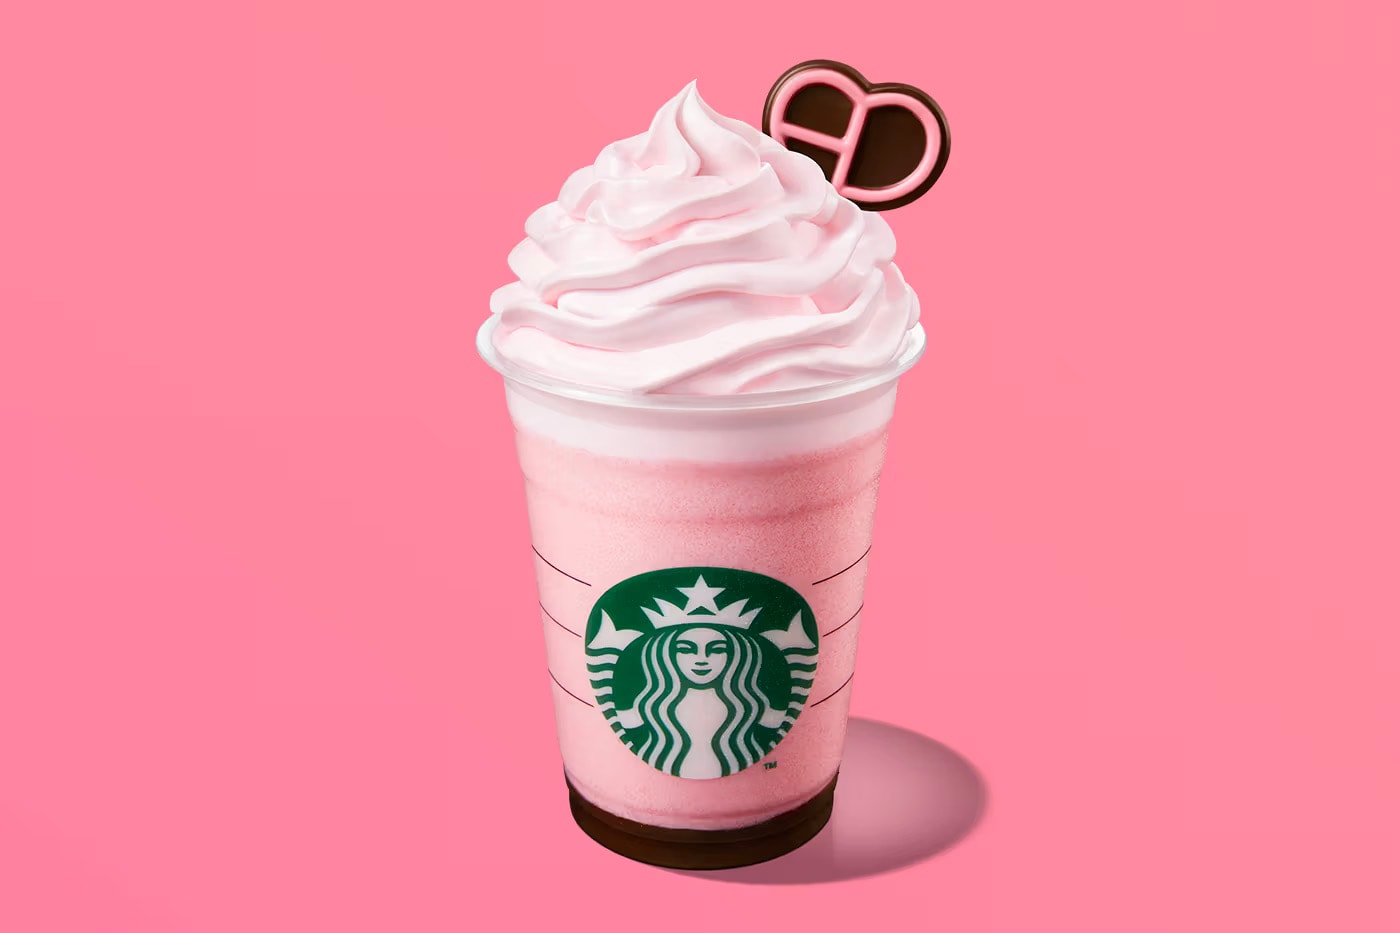 BLACKPINK 携手 Starbucks 推出全新联名系列